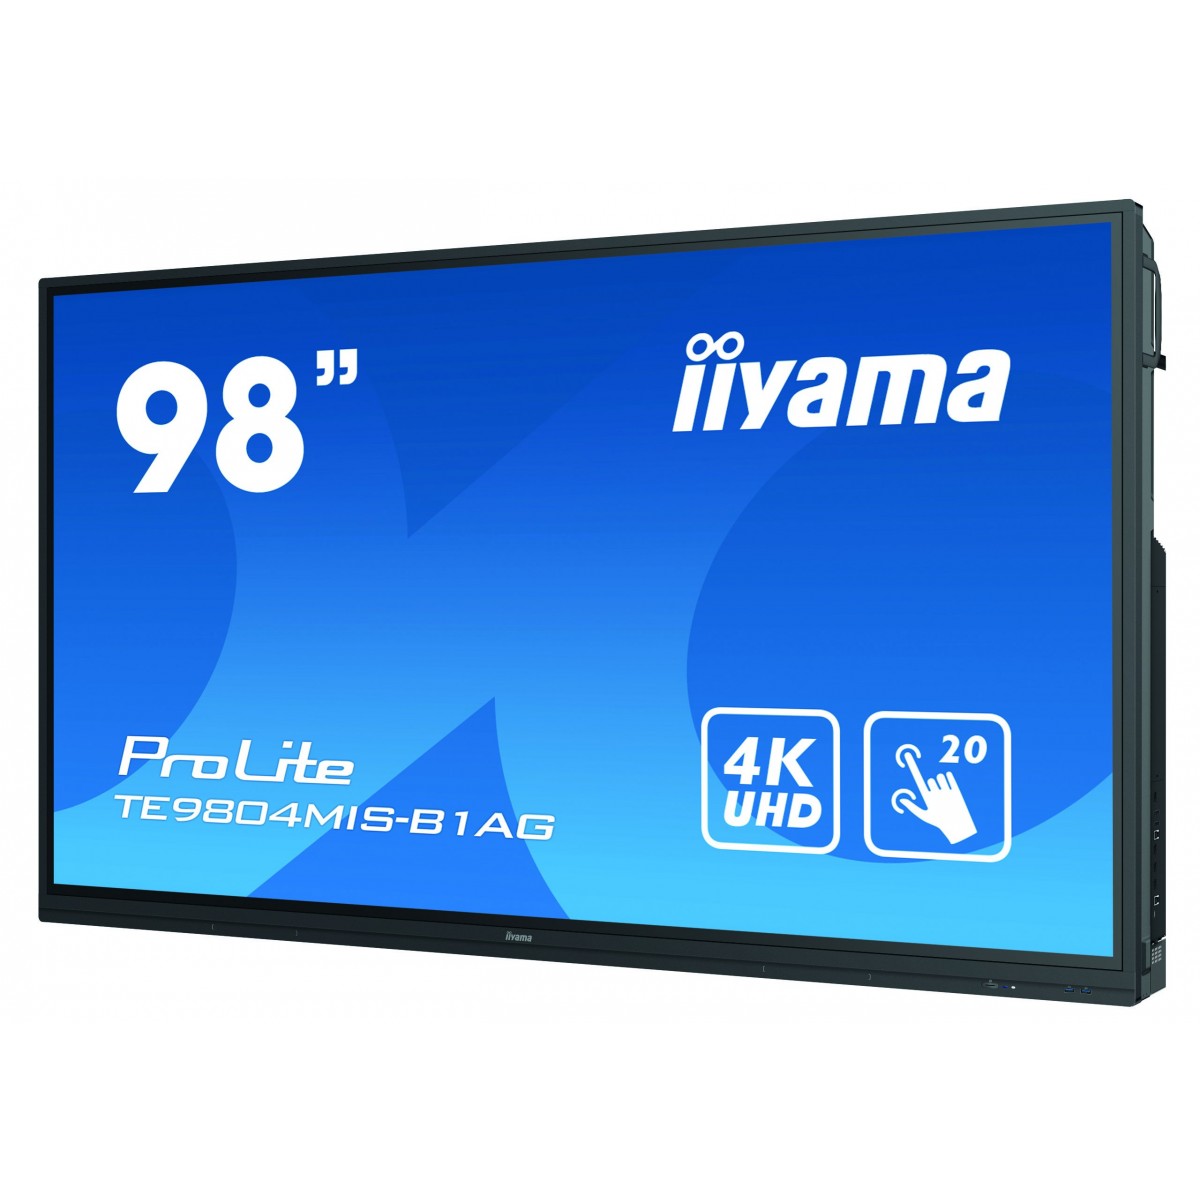 Iiyama 98 T TE9804MIS-B1AG - Flat Screen - 8 ms